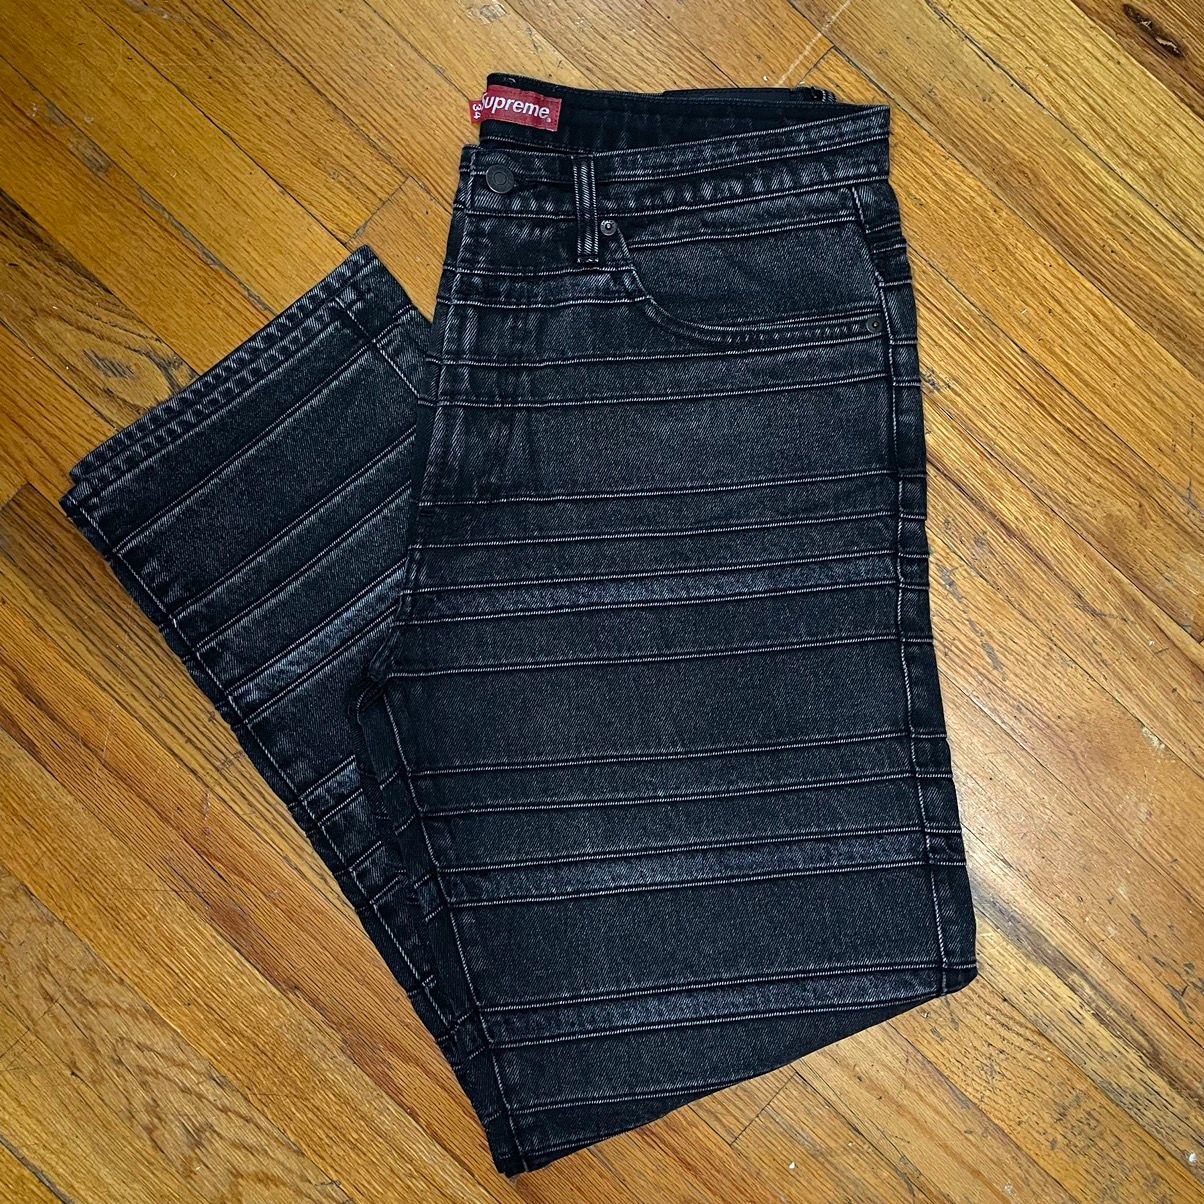 Supreme Supreme denim layered jeans | Grailed